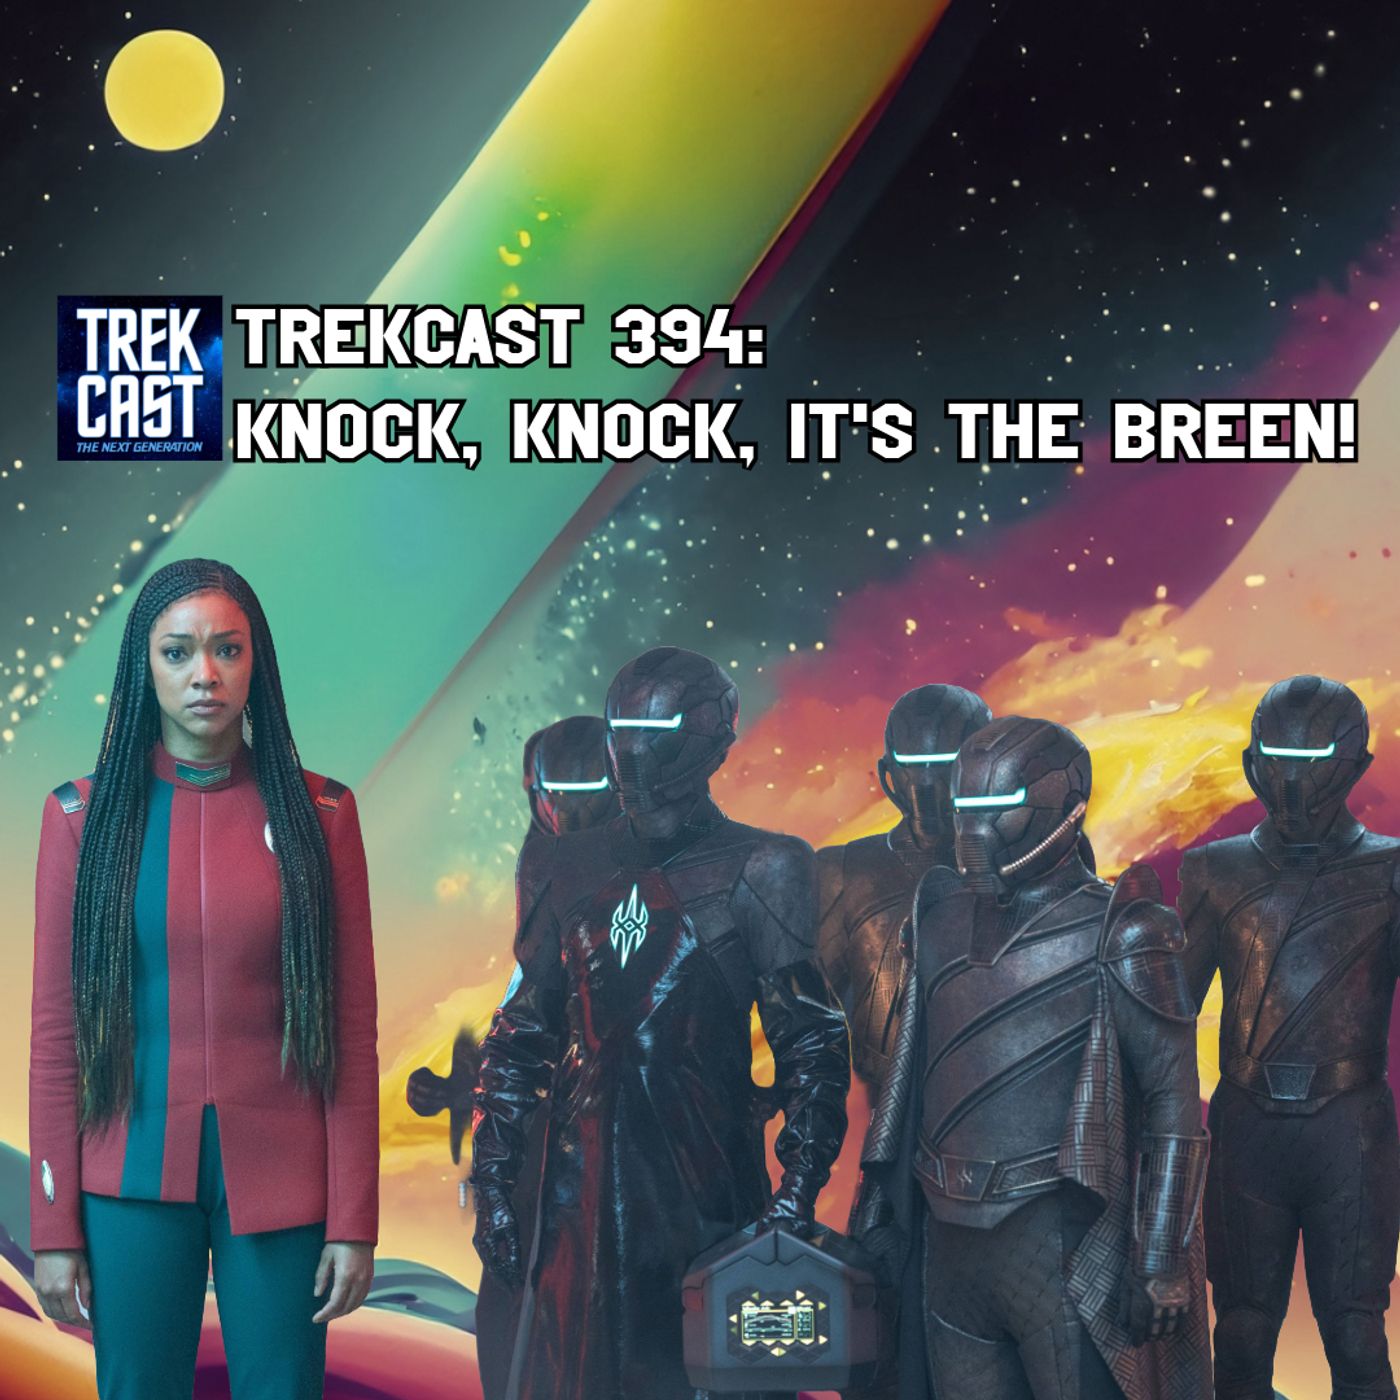 Trekcast 394: Knock, Knock, it’s the Breen!